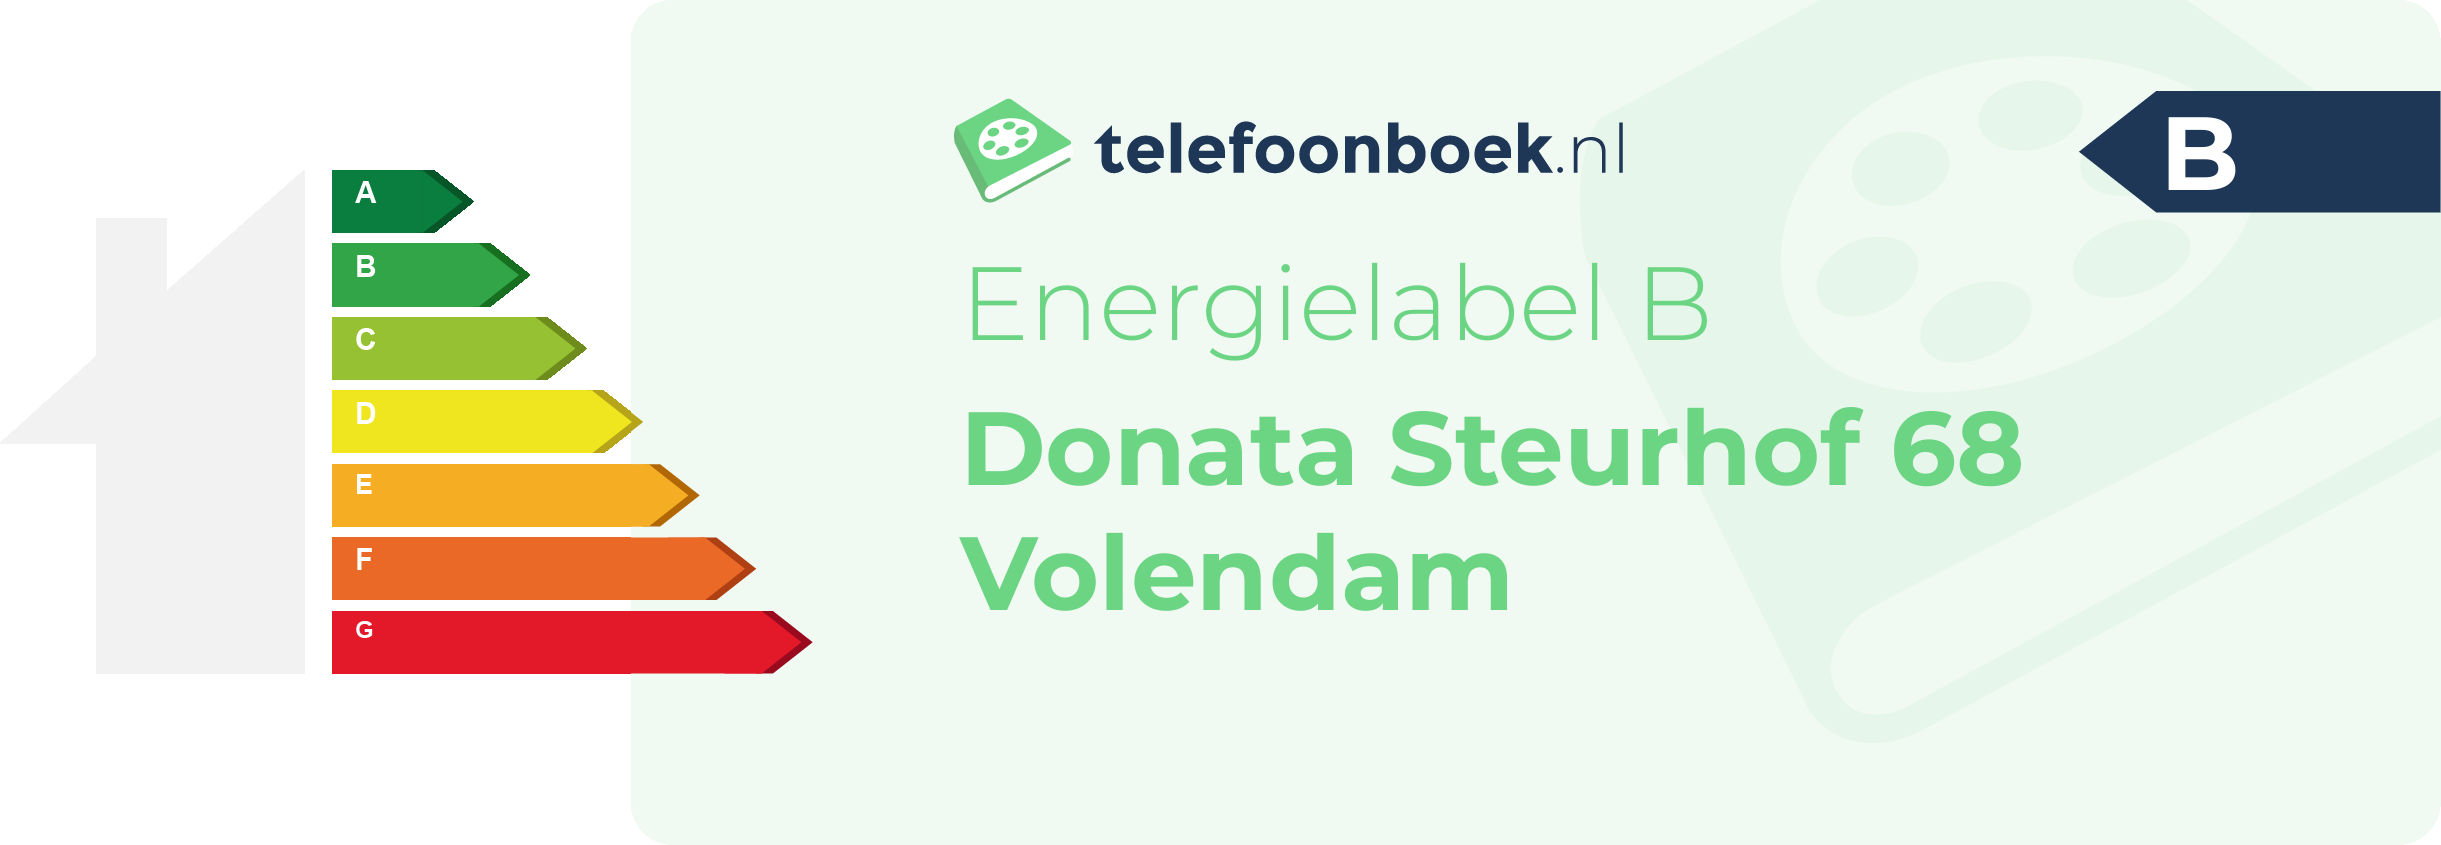 Energielabel Donata Steurhof 68 Volendam